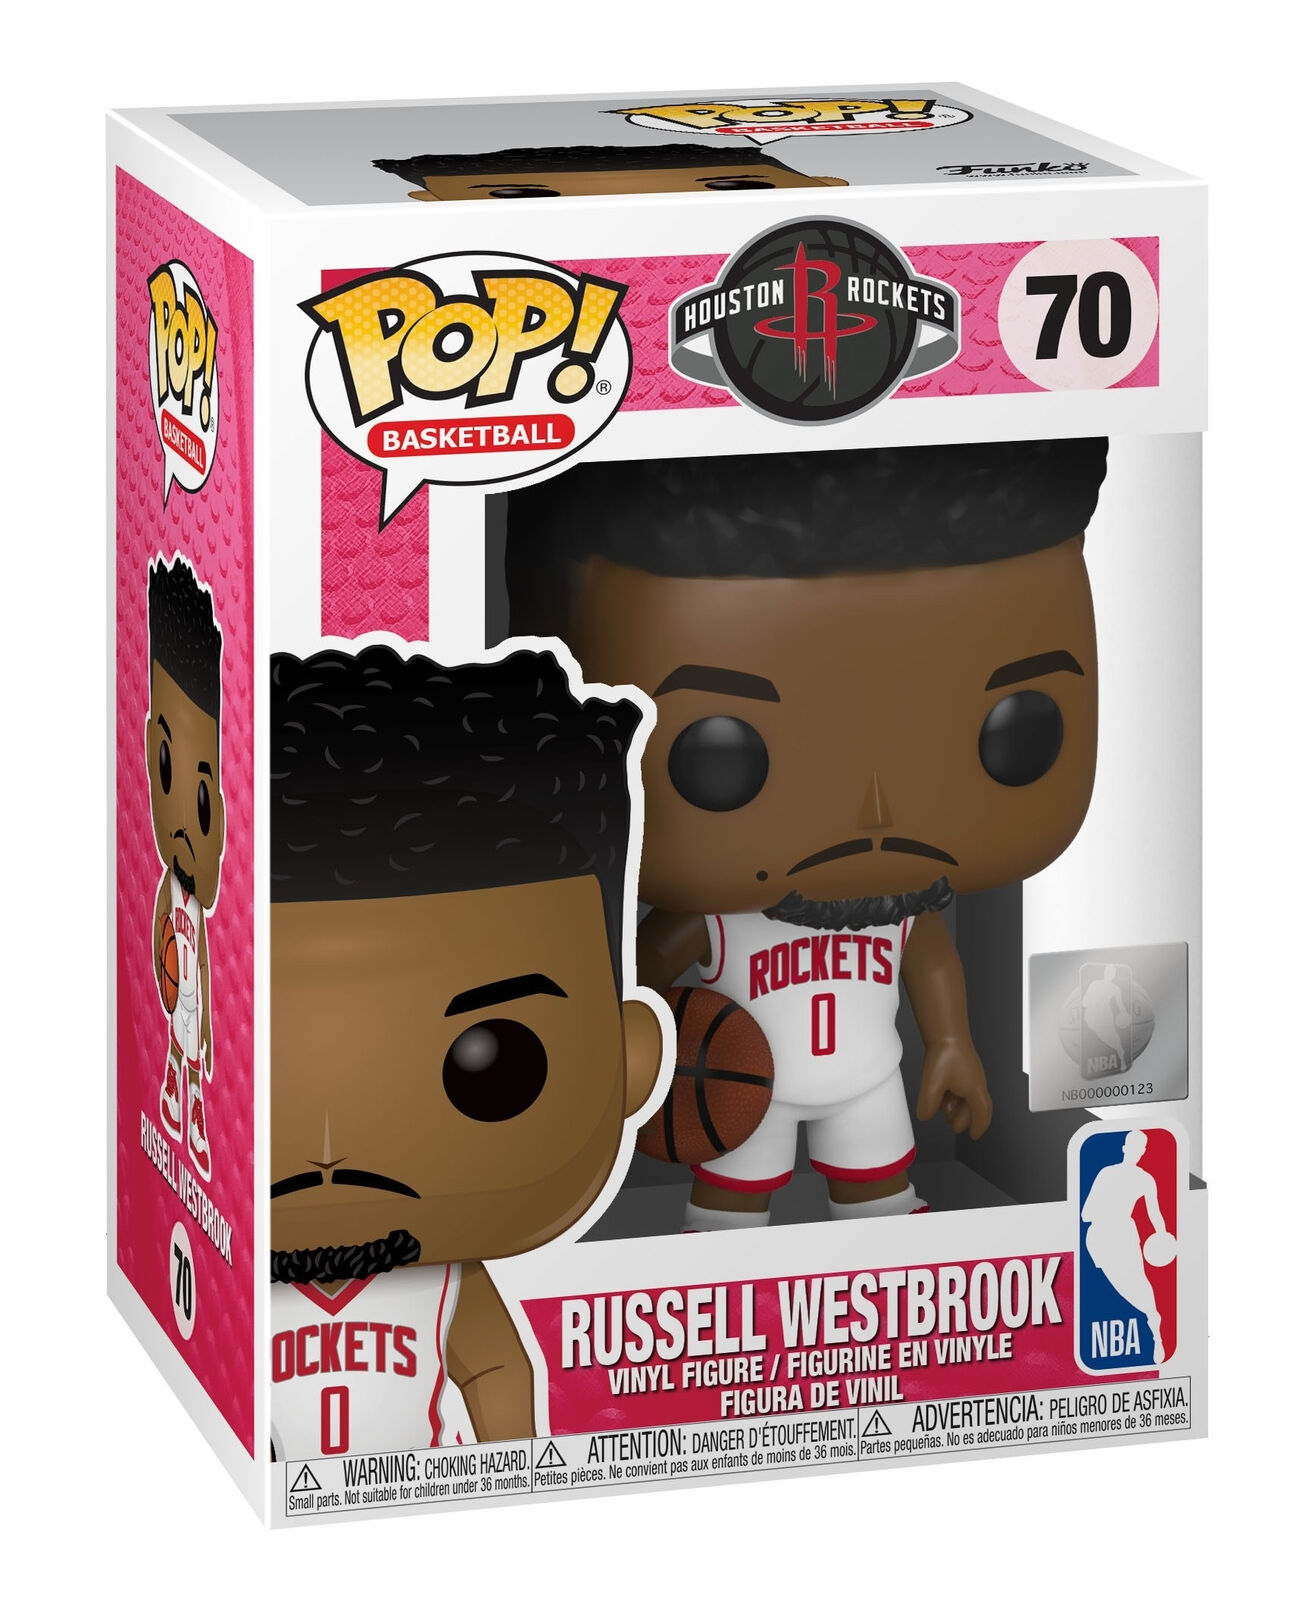 POP NBA - Rockets - Russell Westbrook New in box 70 vinyl figure